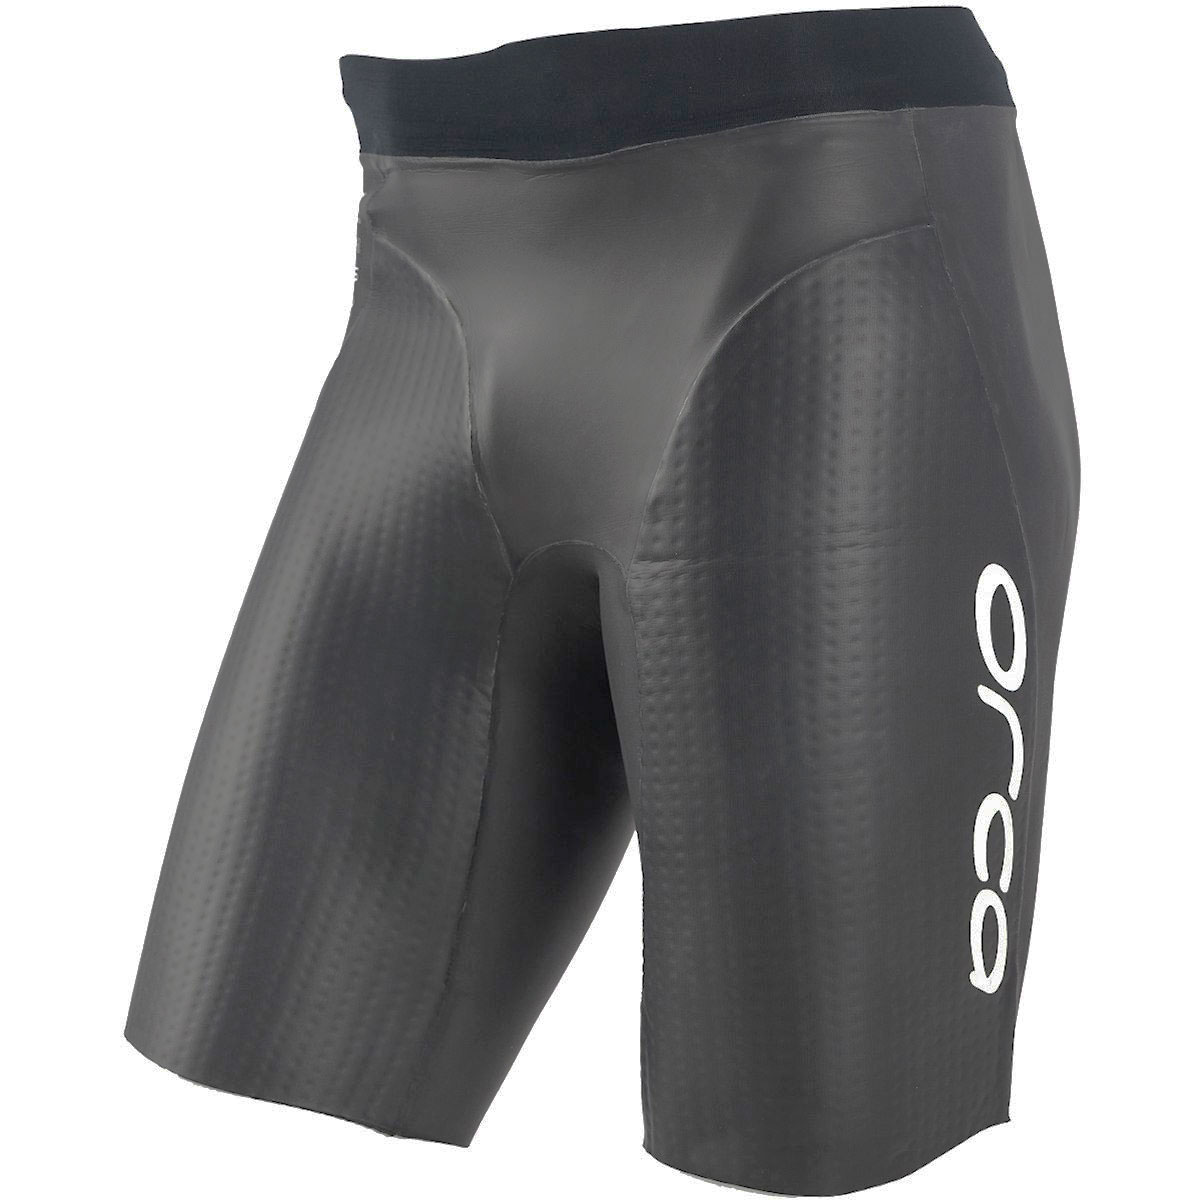 Productfoto van Orca Neoprene Buoyancy Shorts - black